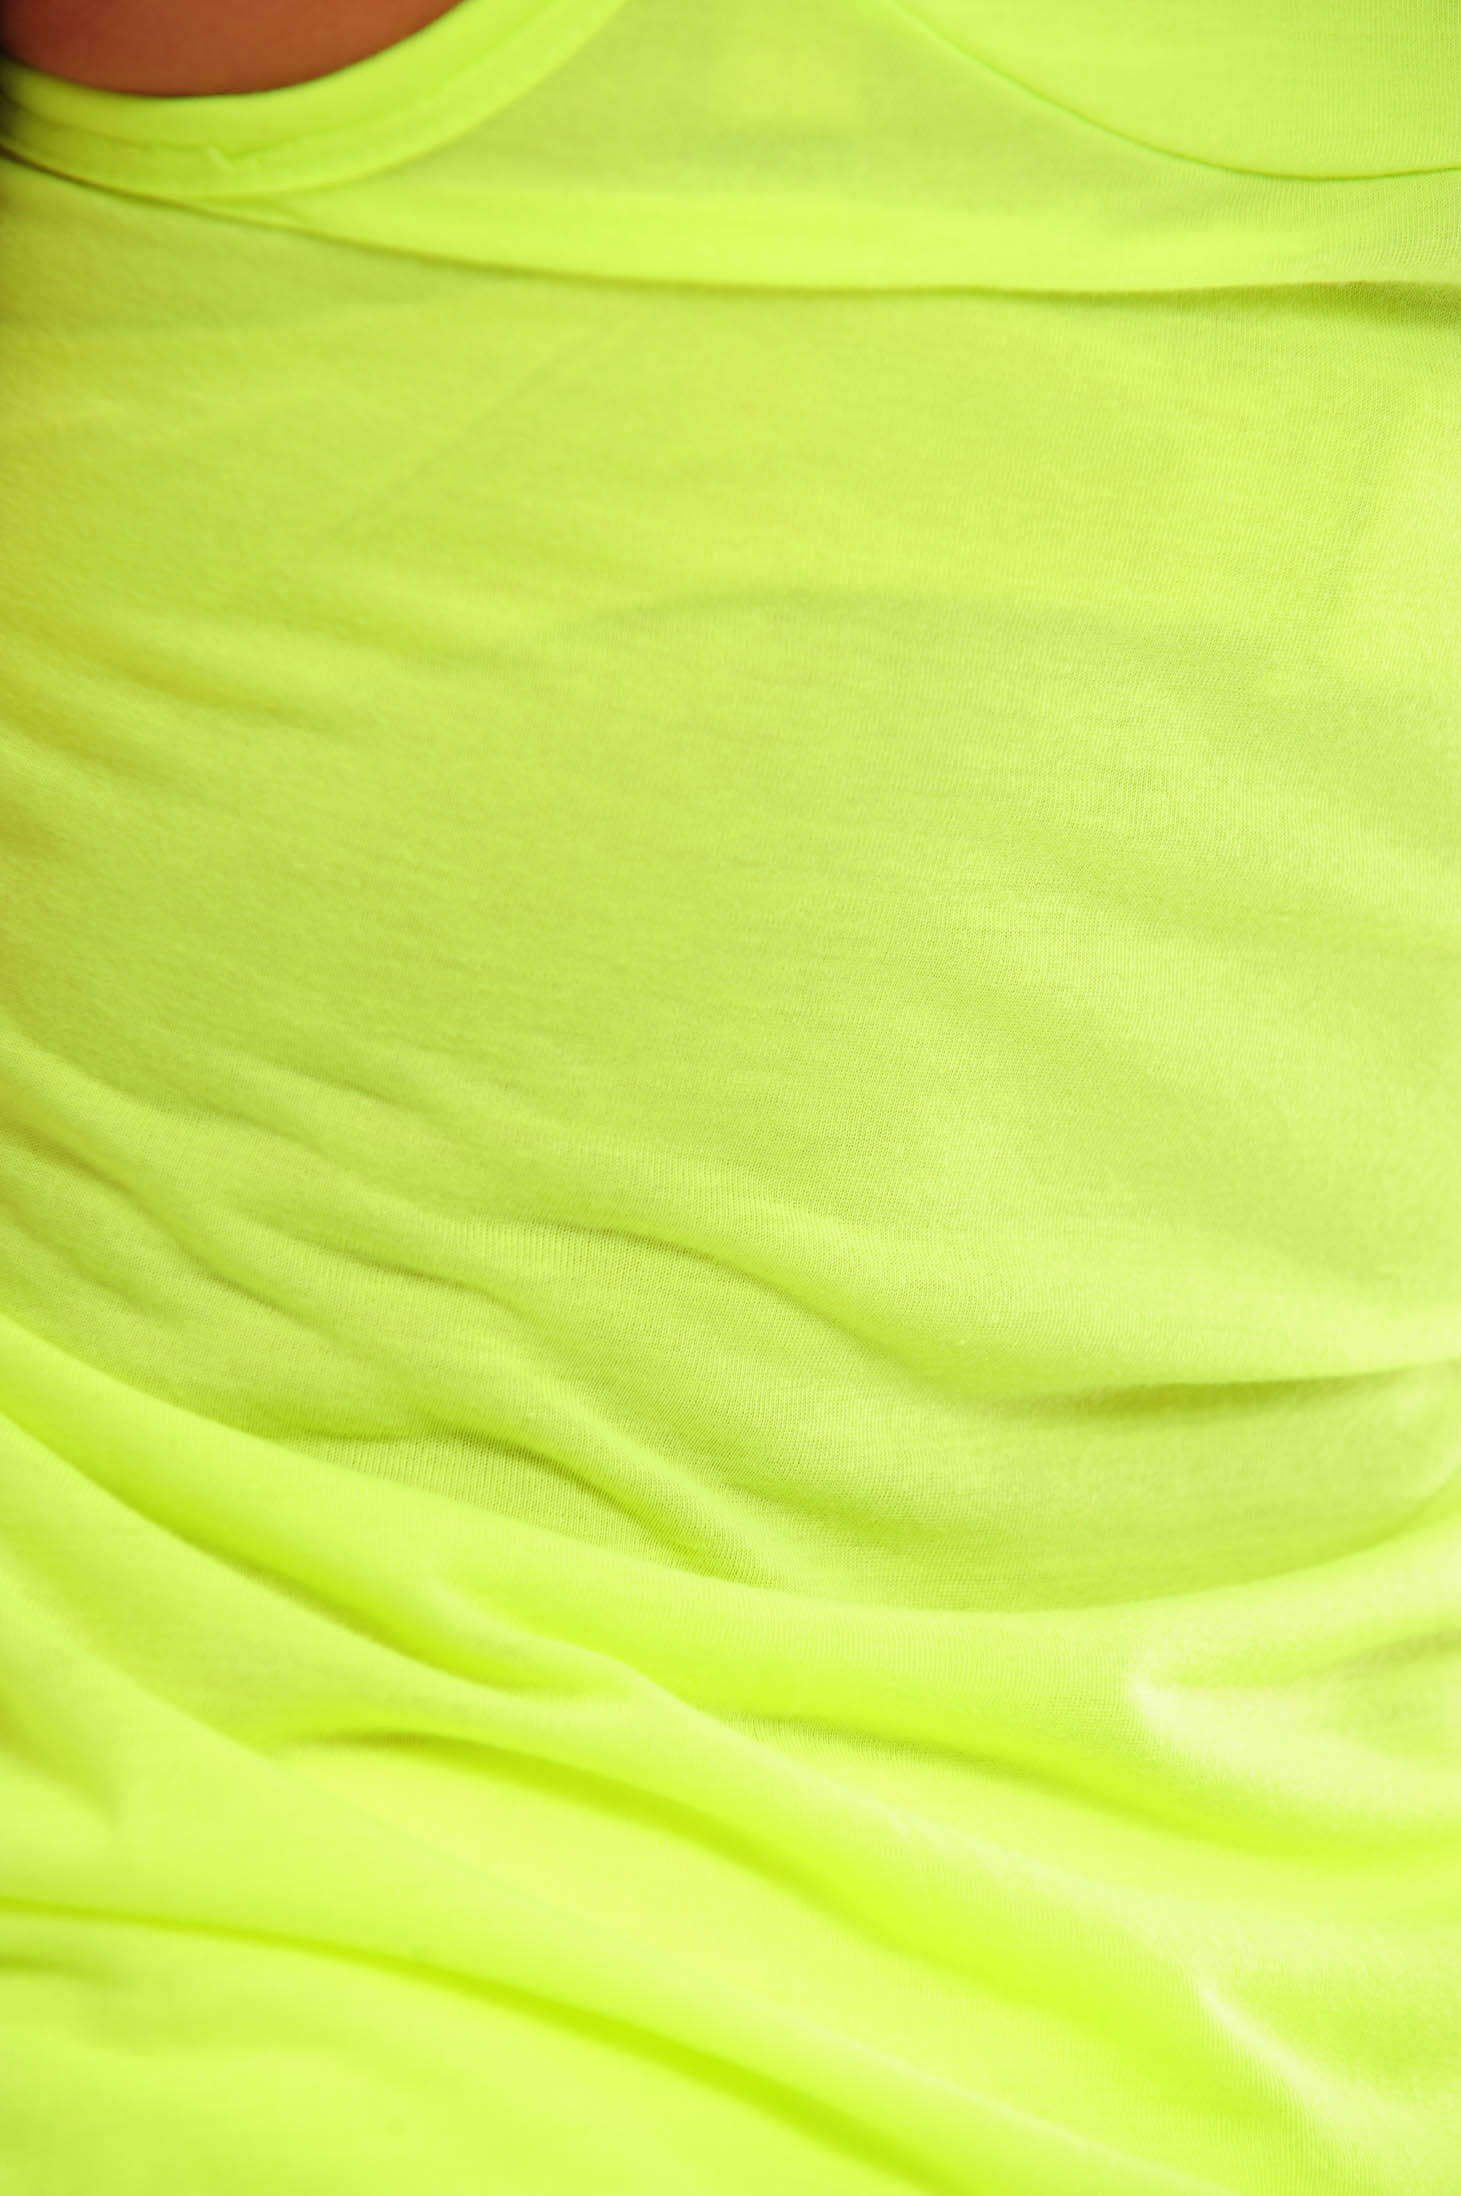 Distinct Essence Green Top Shirt